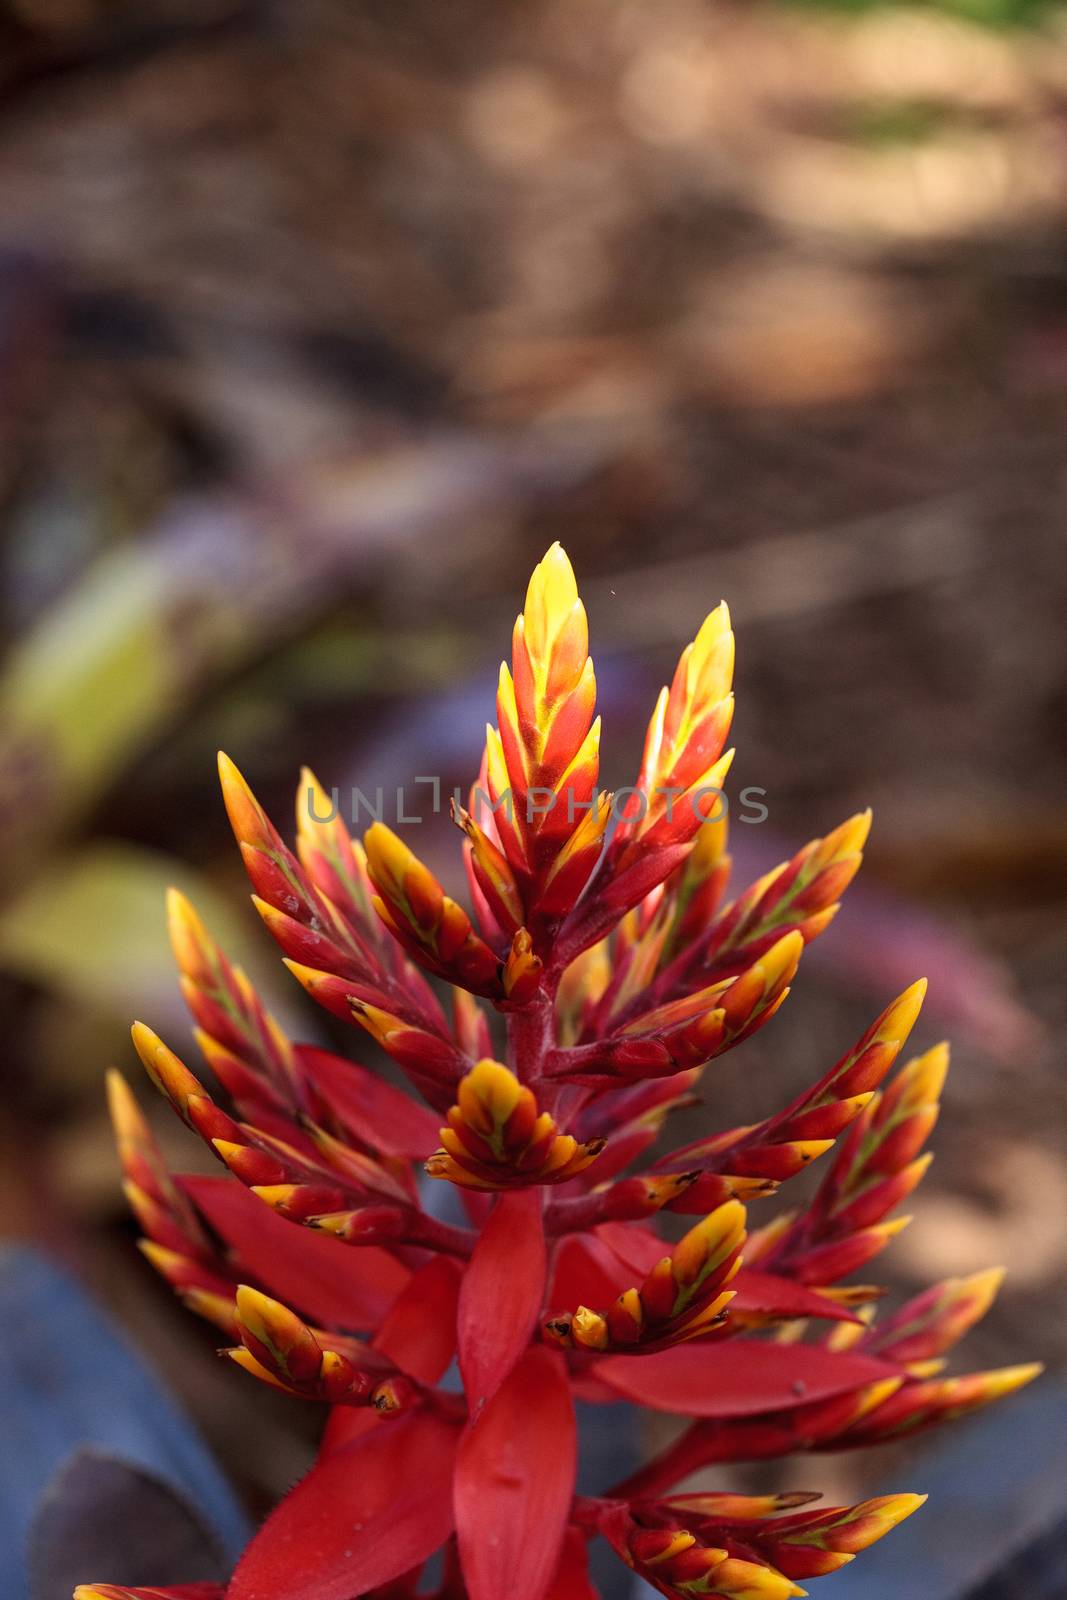 Bromeliad Aechmea ‘Frappuccino’ hybrid flower by steffstarr